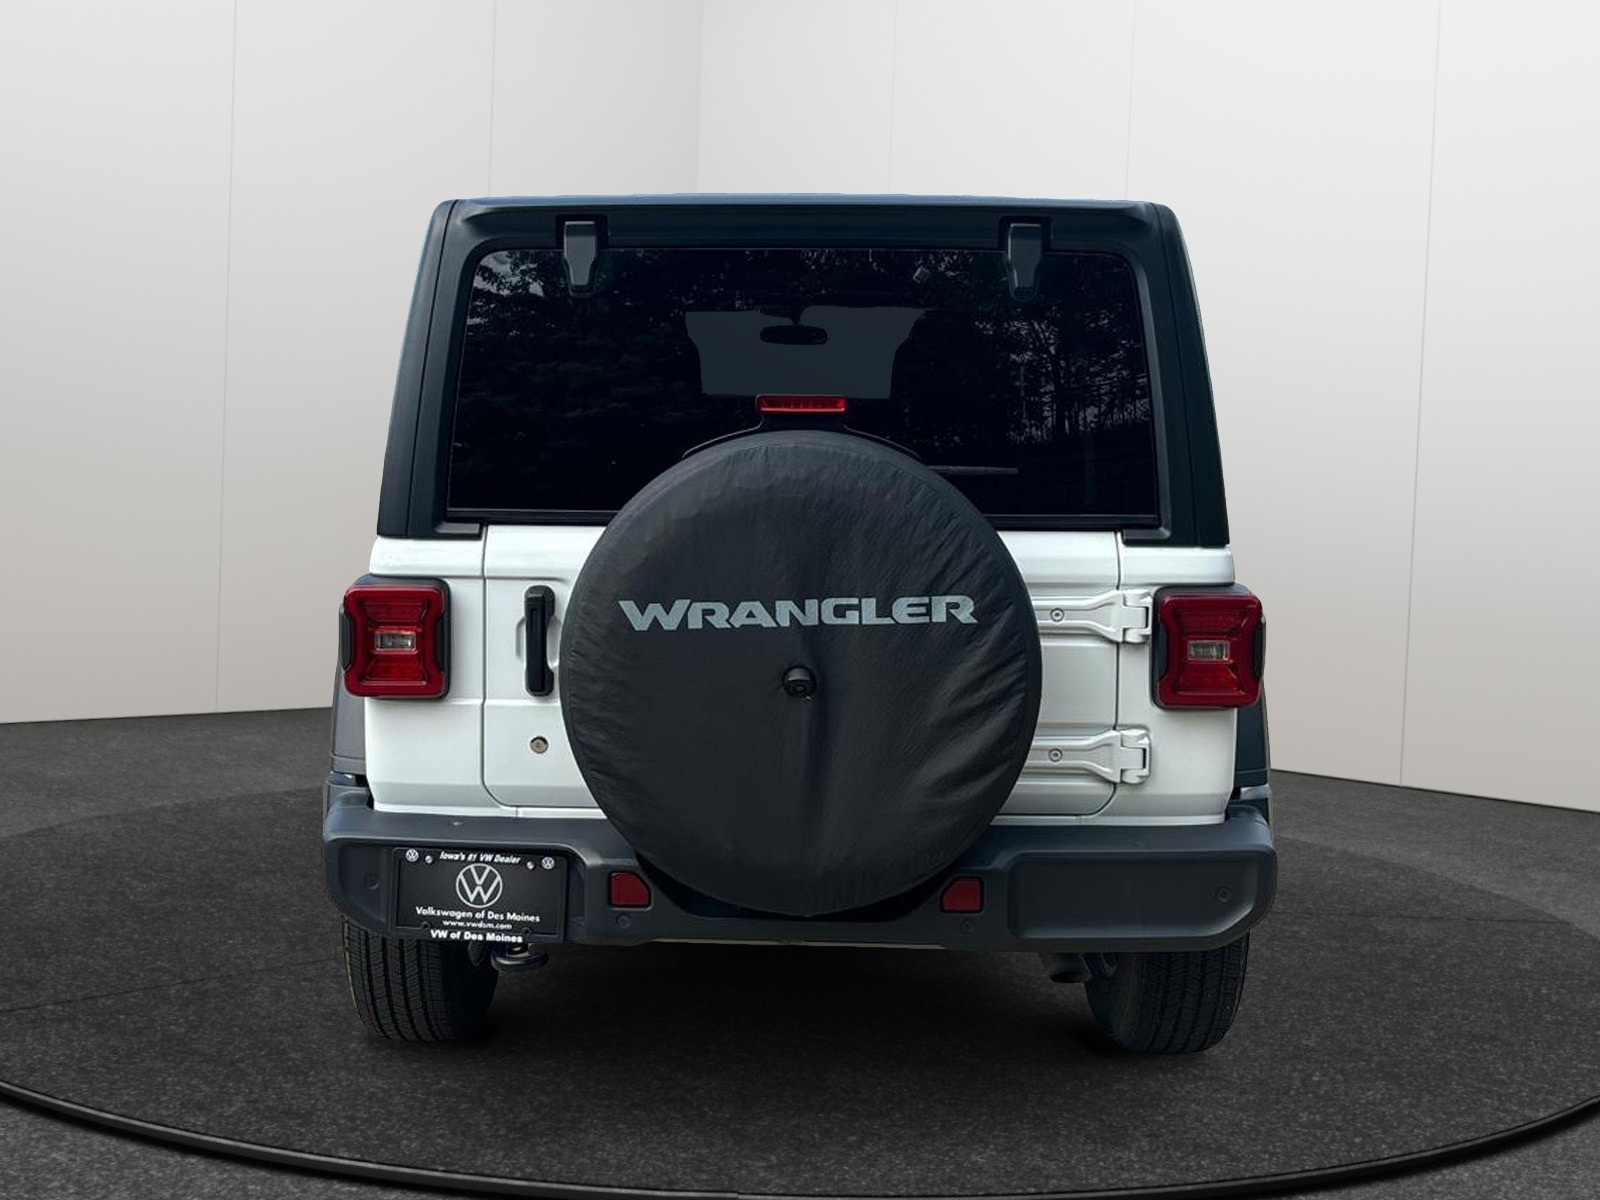 2018 Jeep Wrangler Unlimited Sport S 5